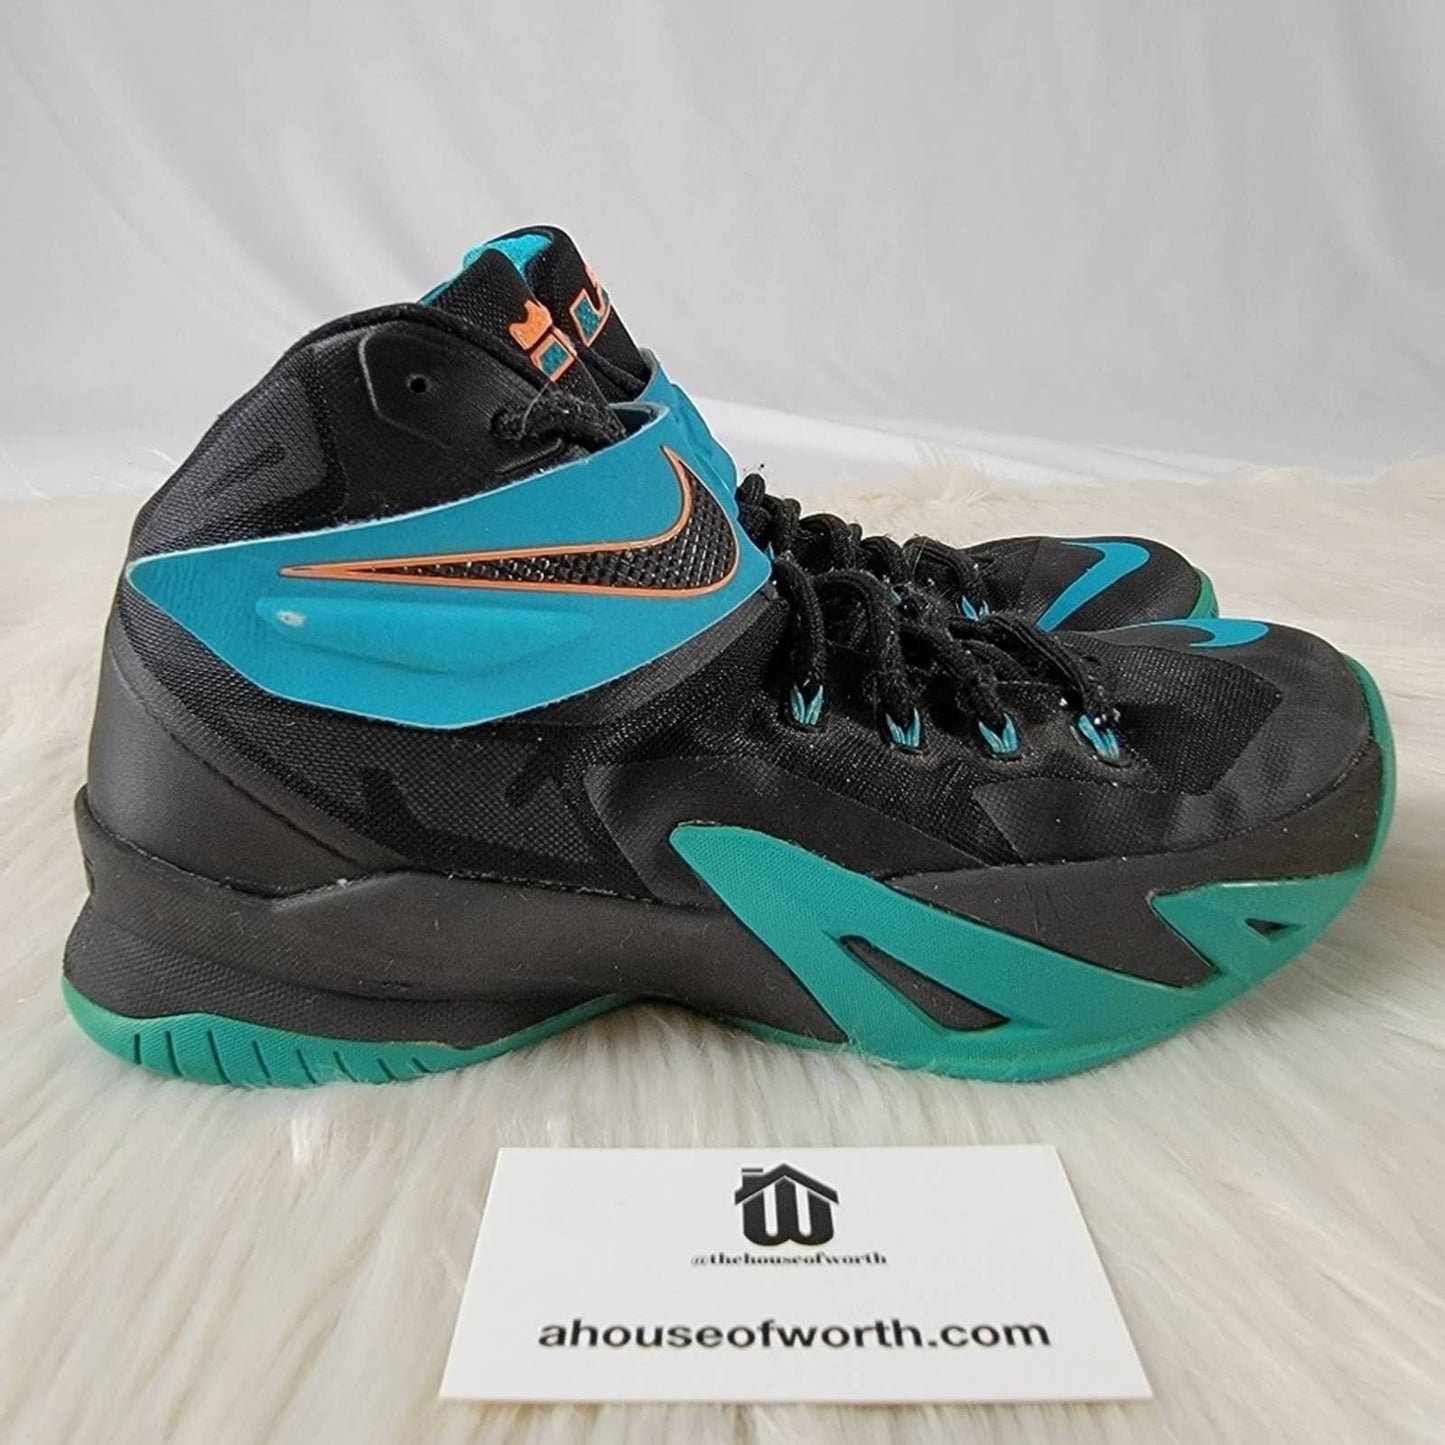 Nike Air Zoom Soldier VIII Rare Basketball Sneakers - 7.5/9